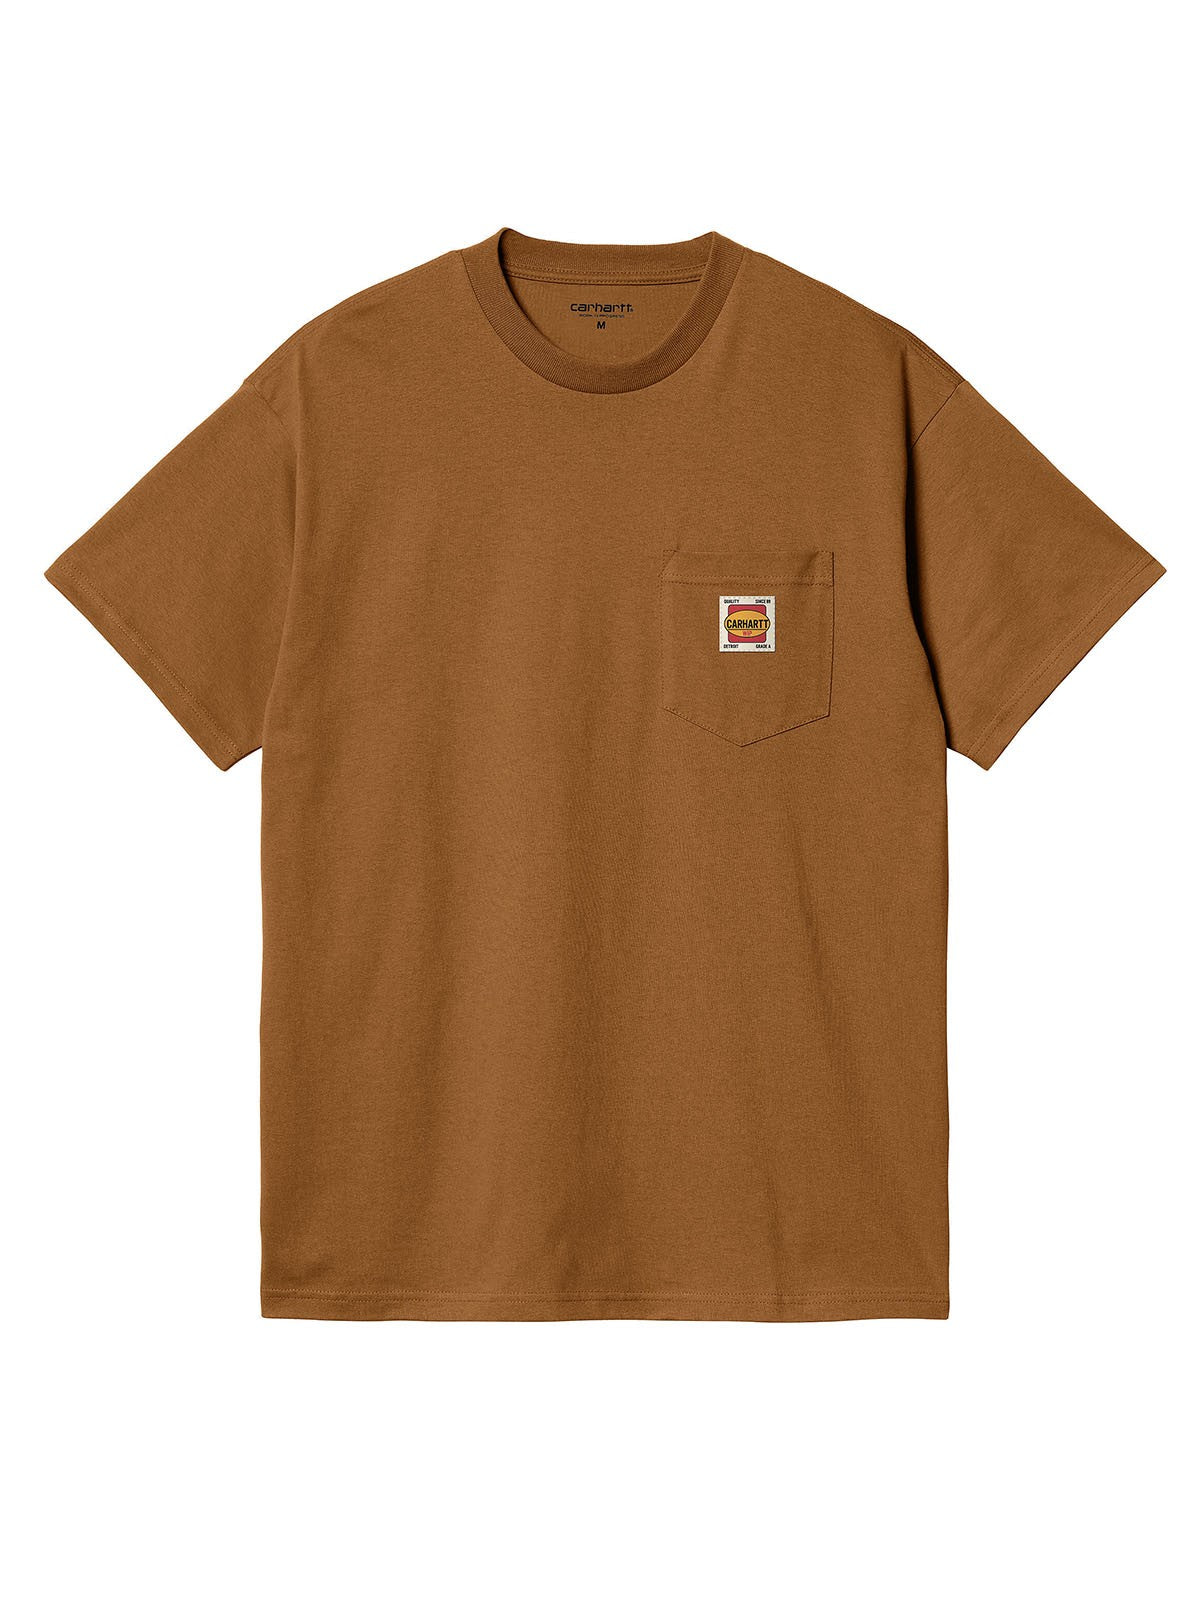 T-shirt Uomo Carhartt Wip - S/S Field Pocket T-Shirt - Marrone